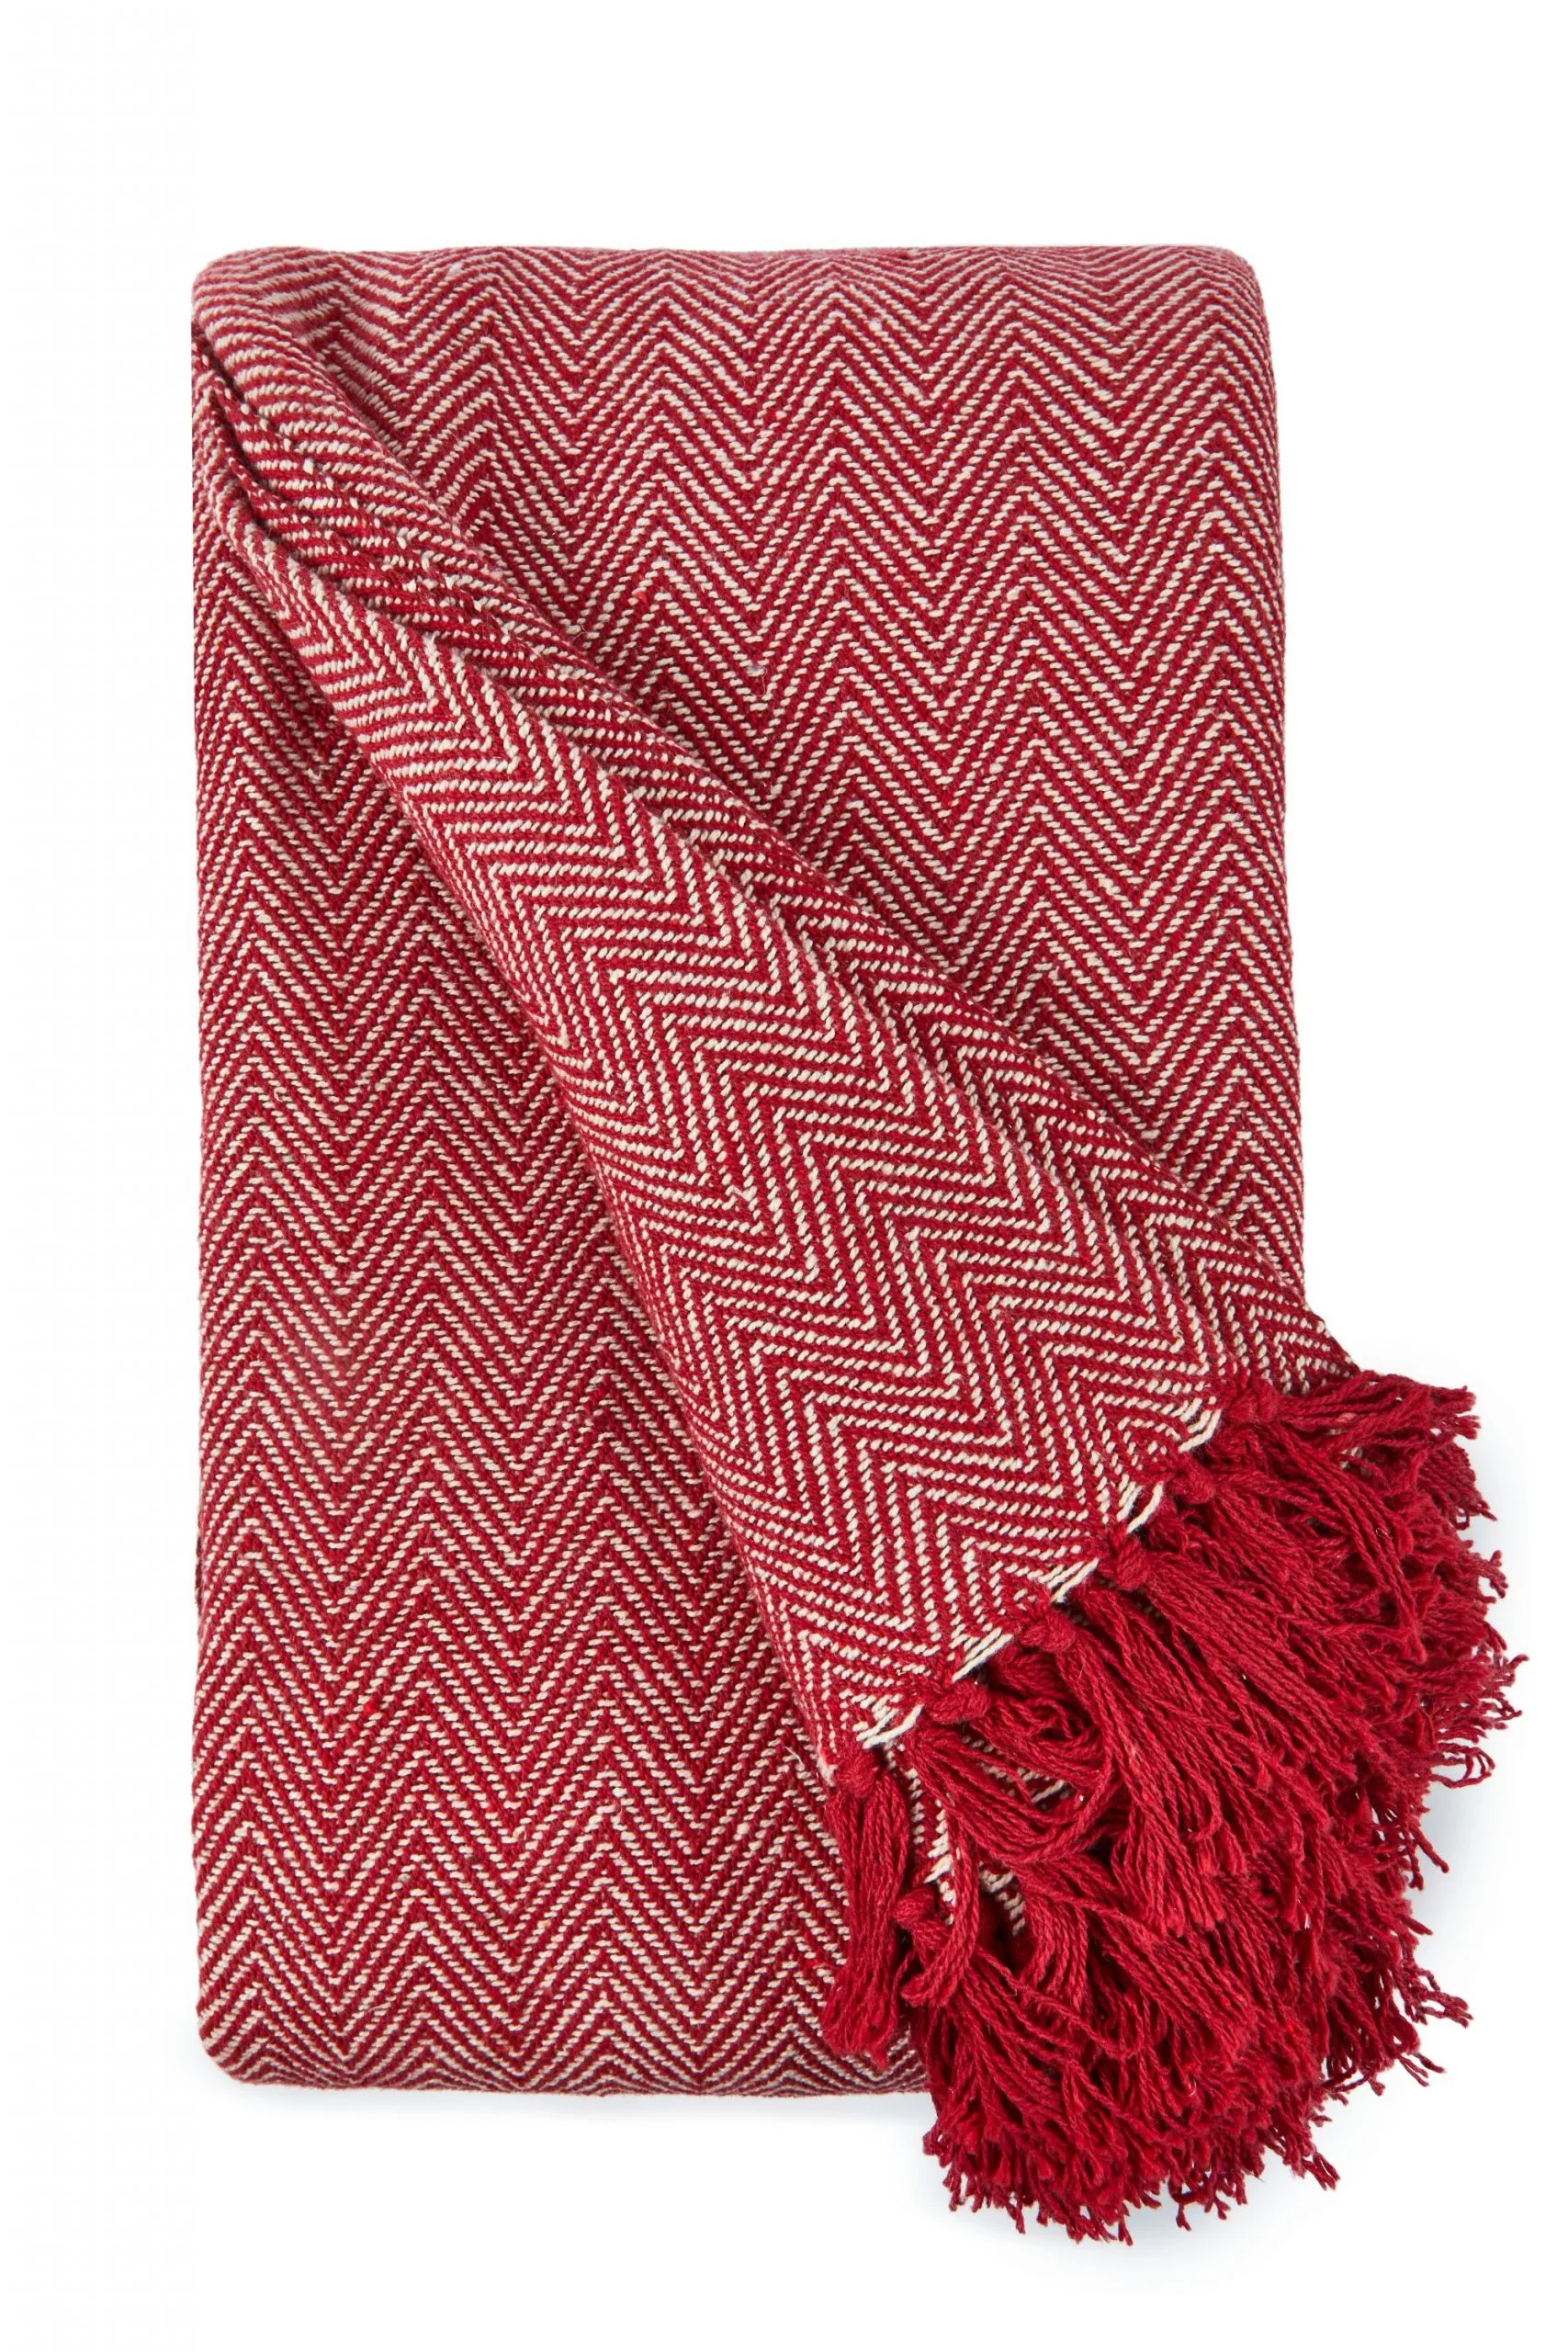 Herringbone Design Recycled red Cotton Blanket folded